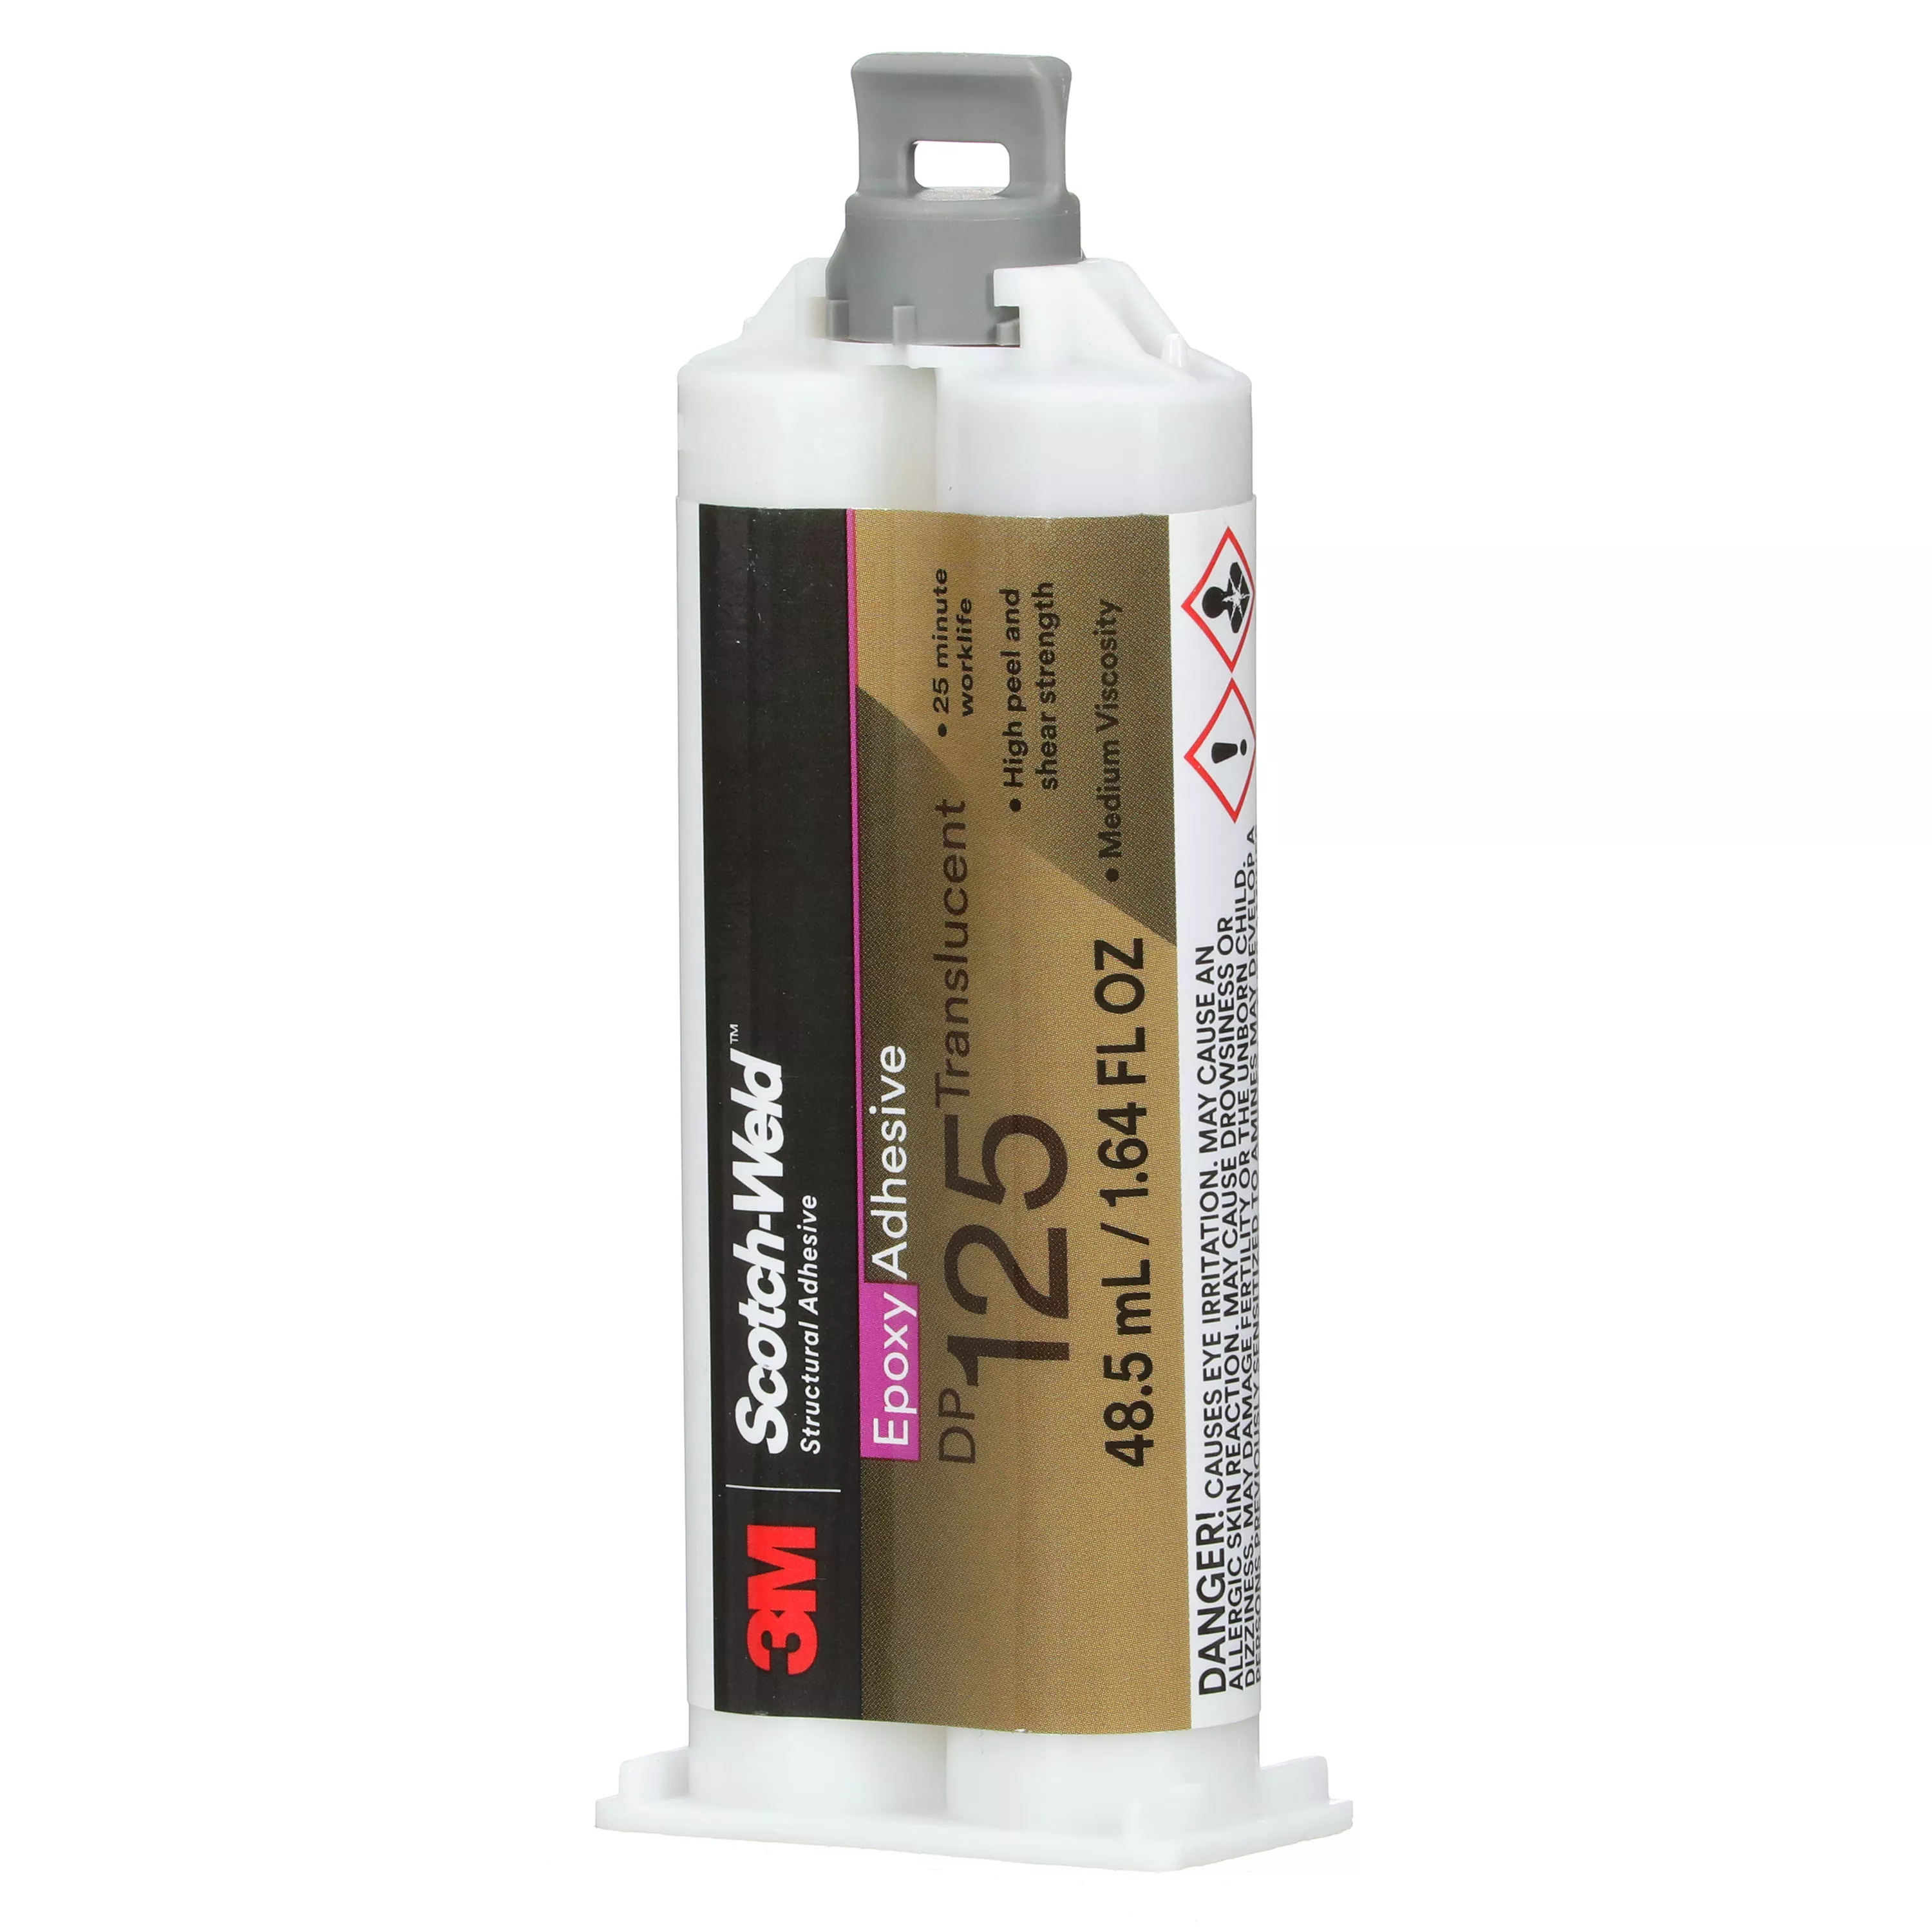 SKU 7100148734 | 3M™ Scotch-Weld™ Epoxy Adhesive DP125